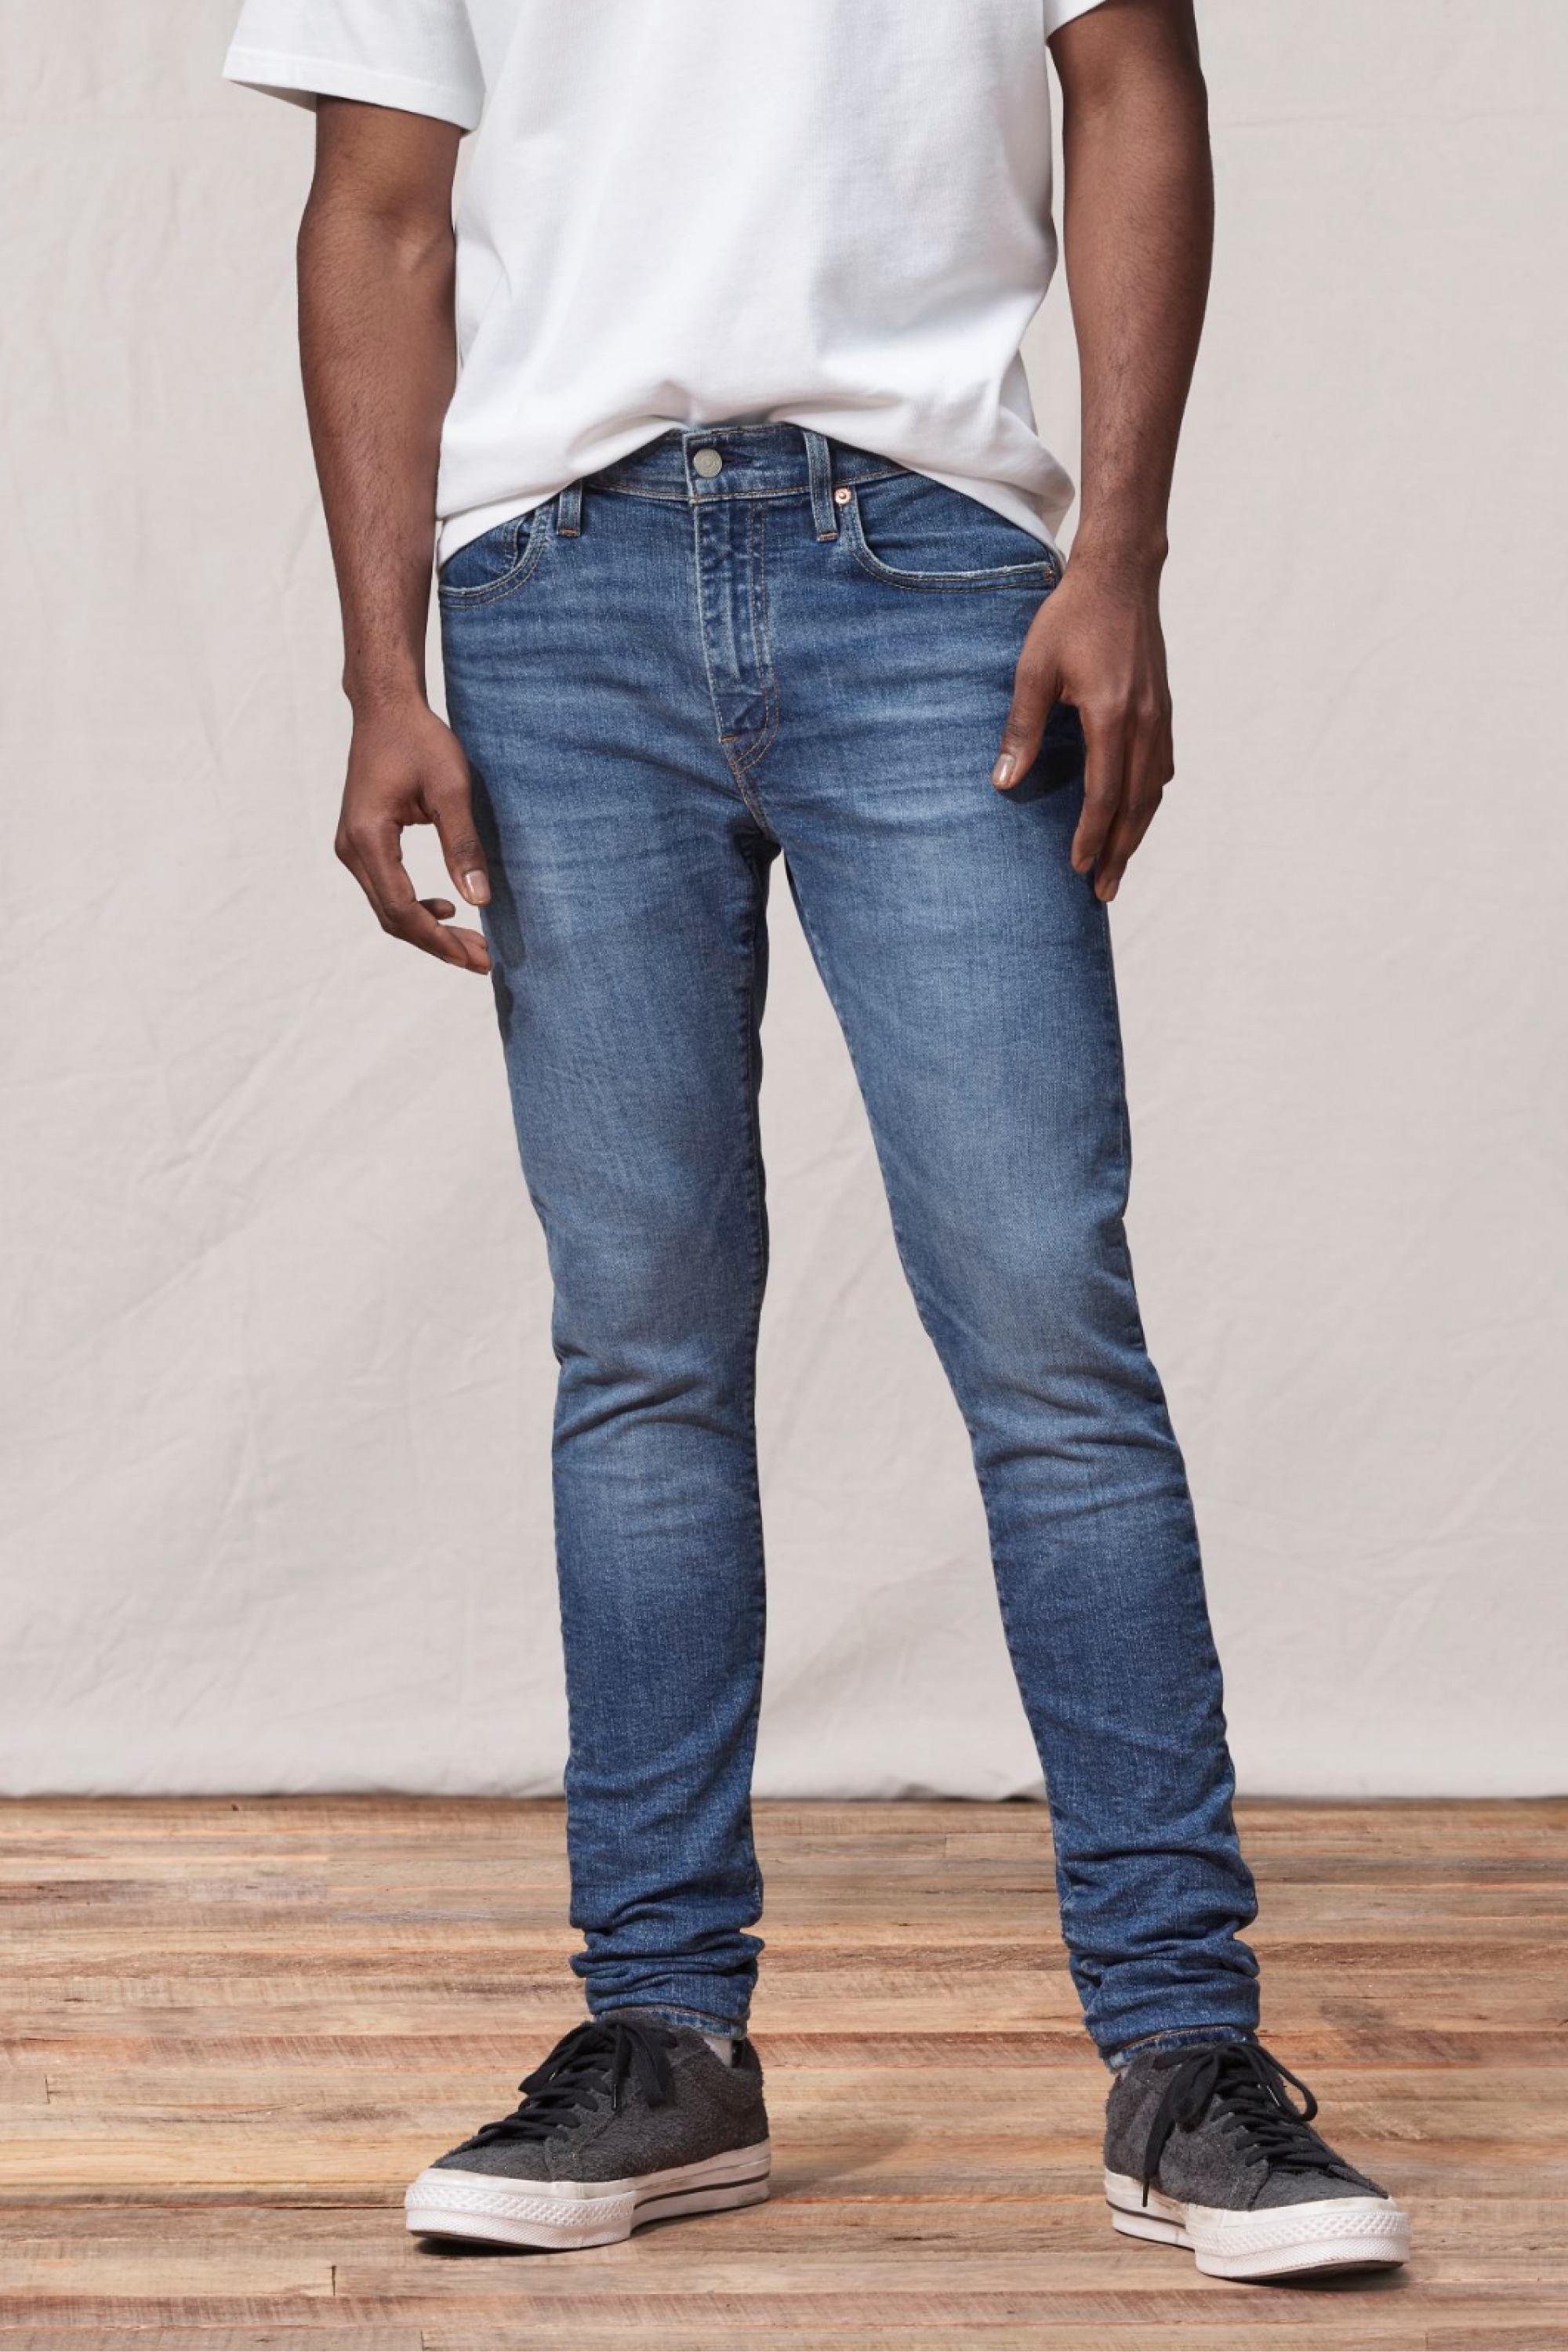 levis mens jeans styles